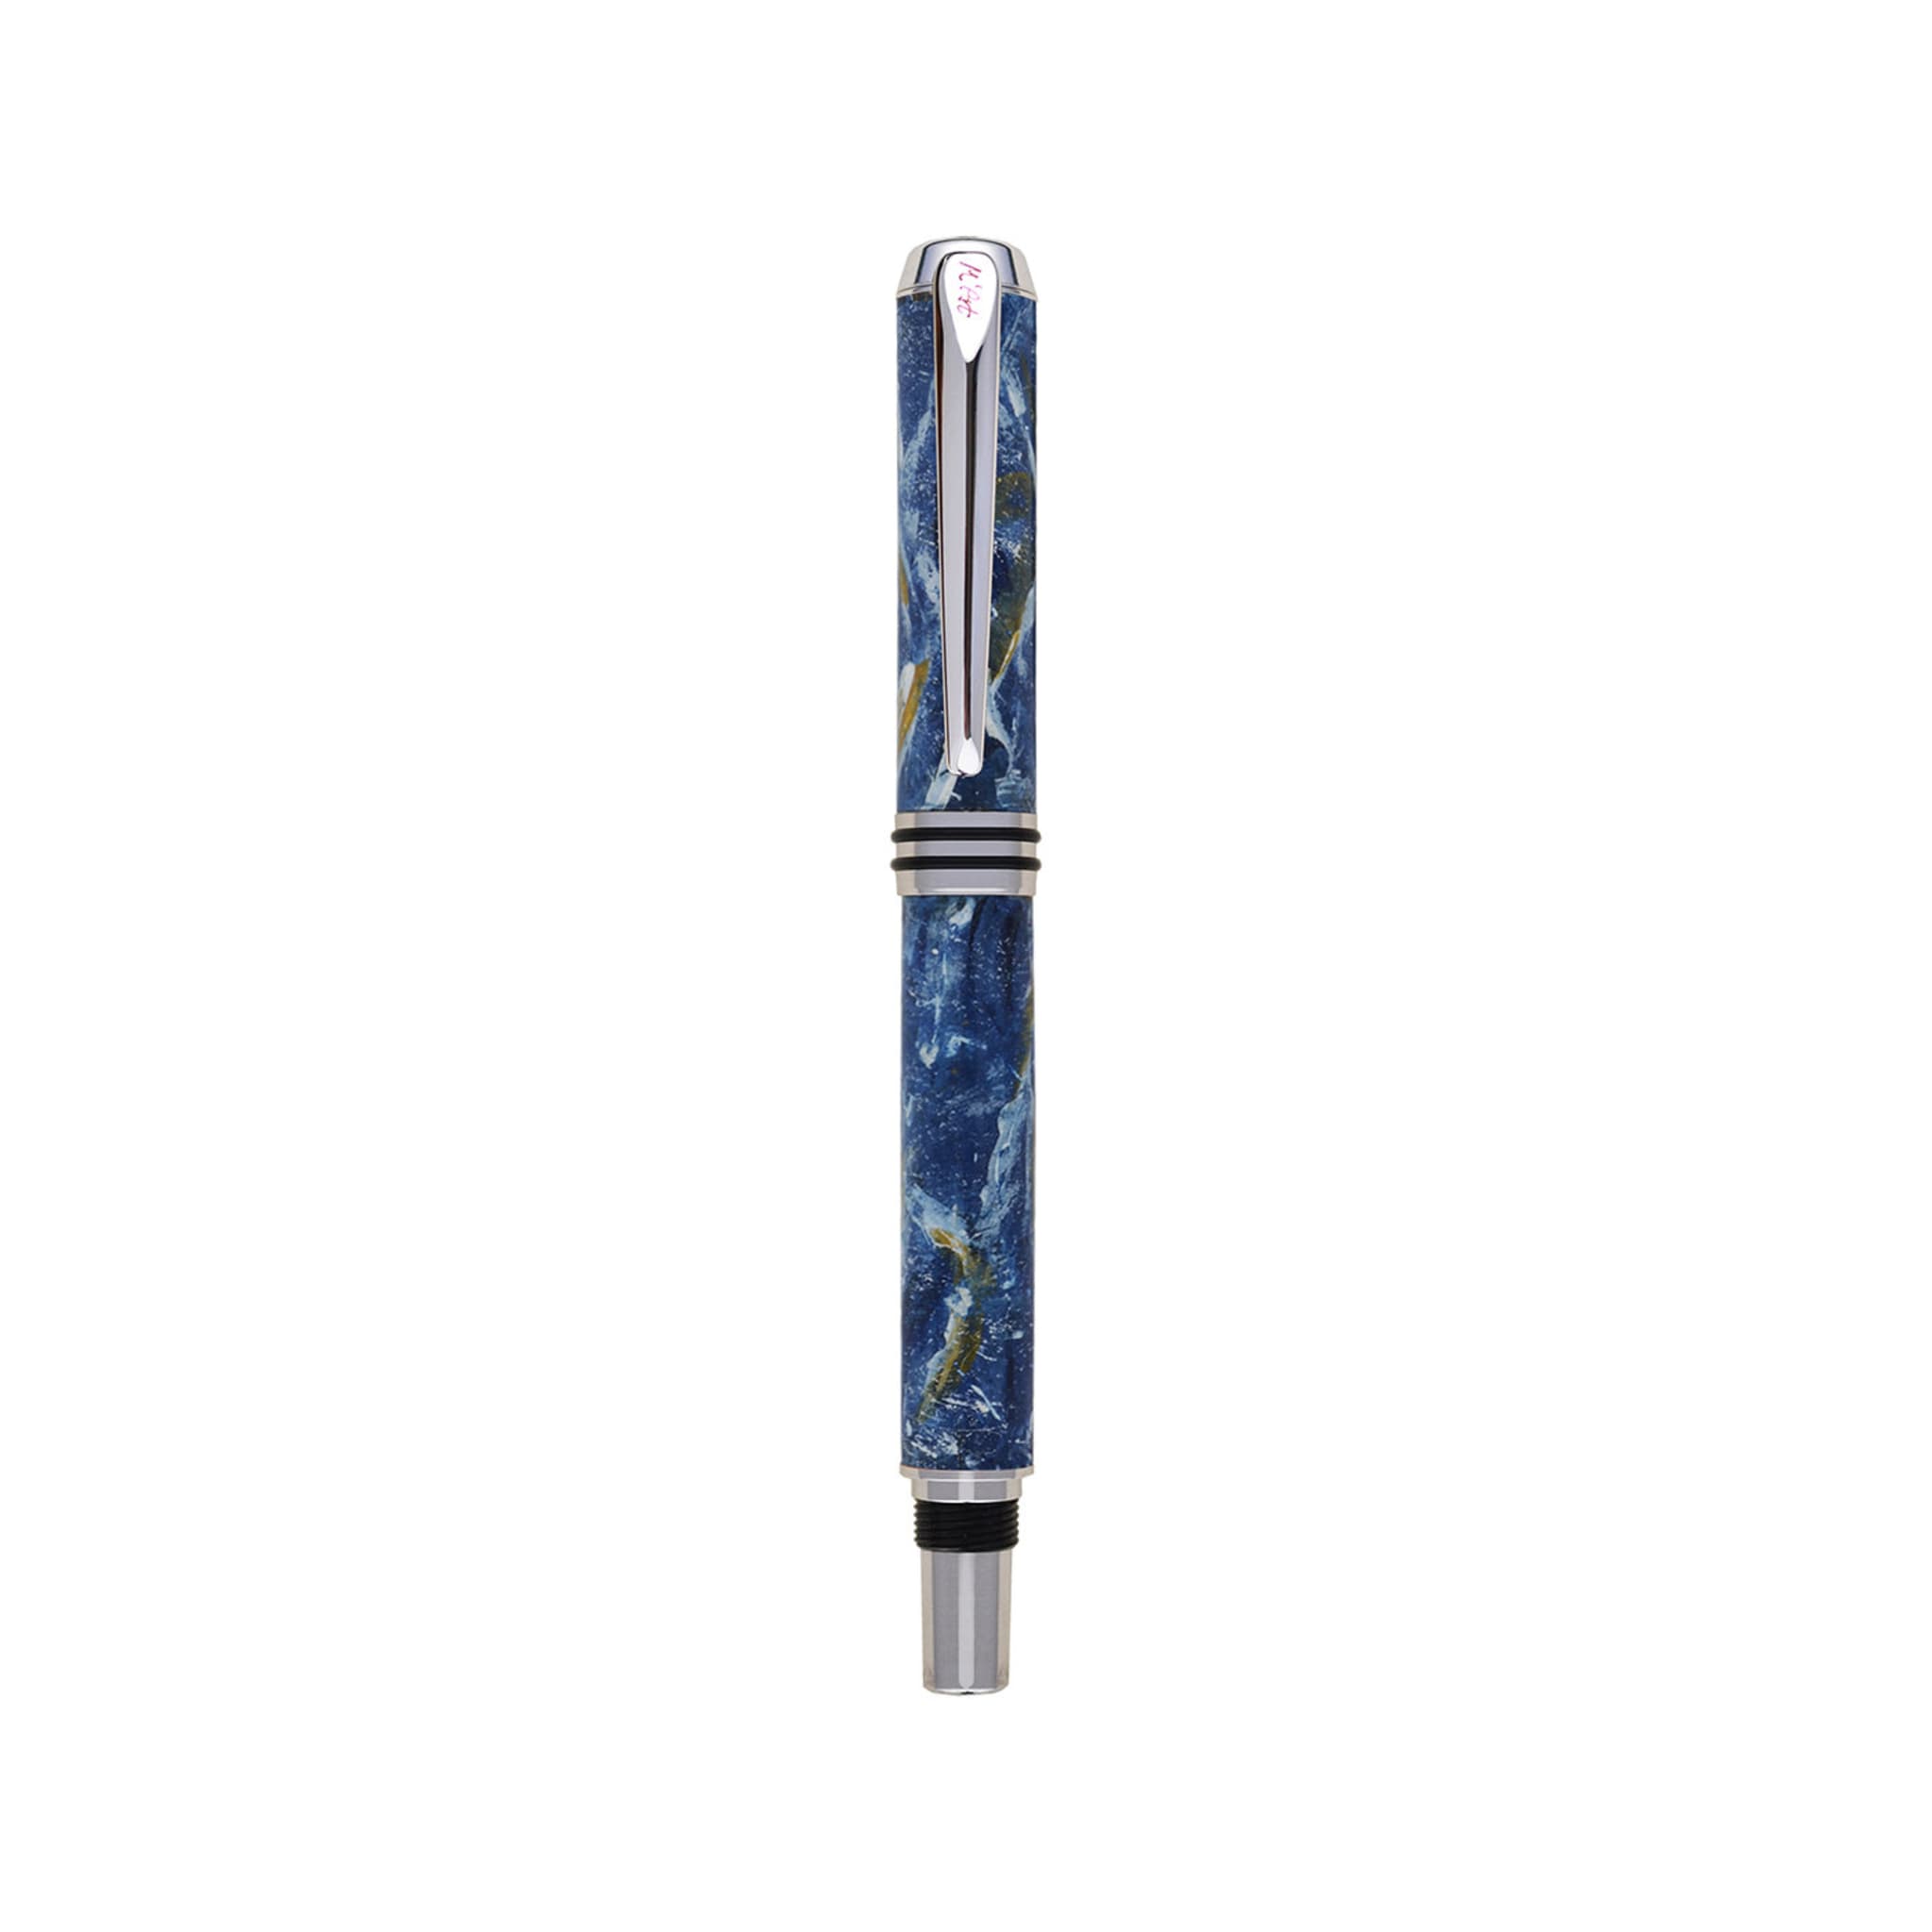 Antea Marbled Blue Roller Pen in Olive Wood - Alternative view 1